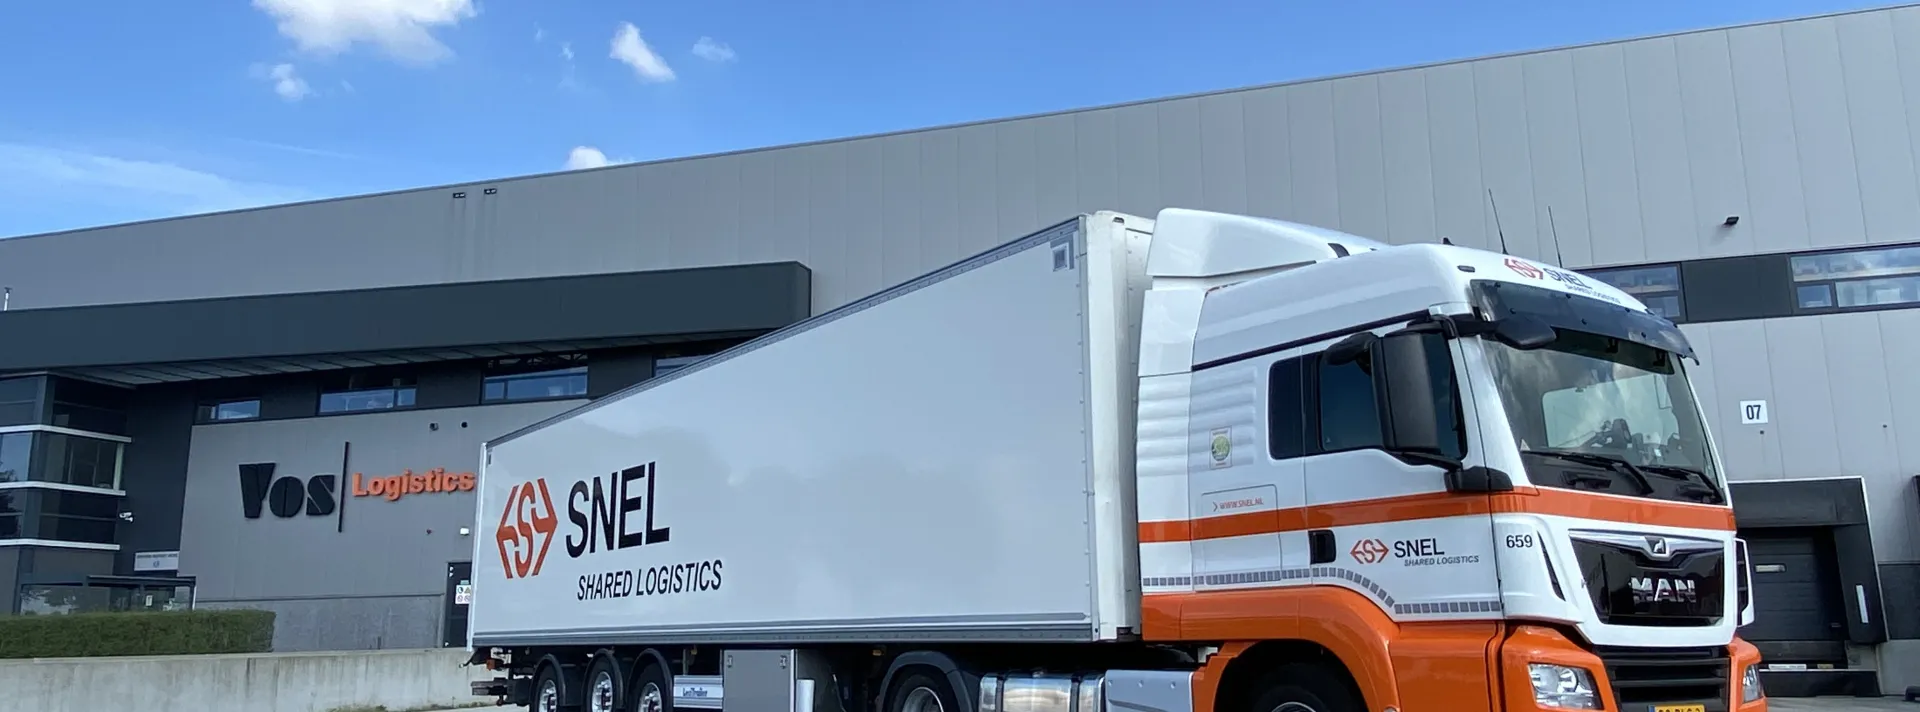 VOS Logistics ciężarówka